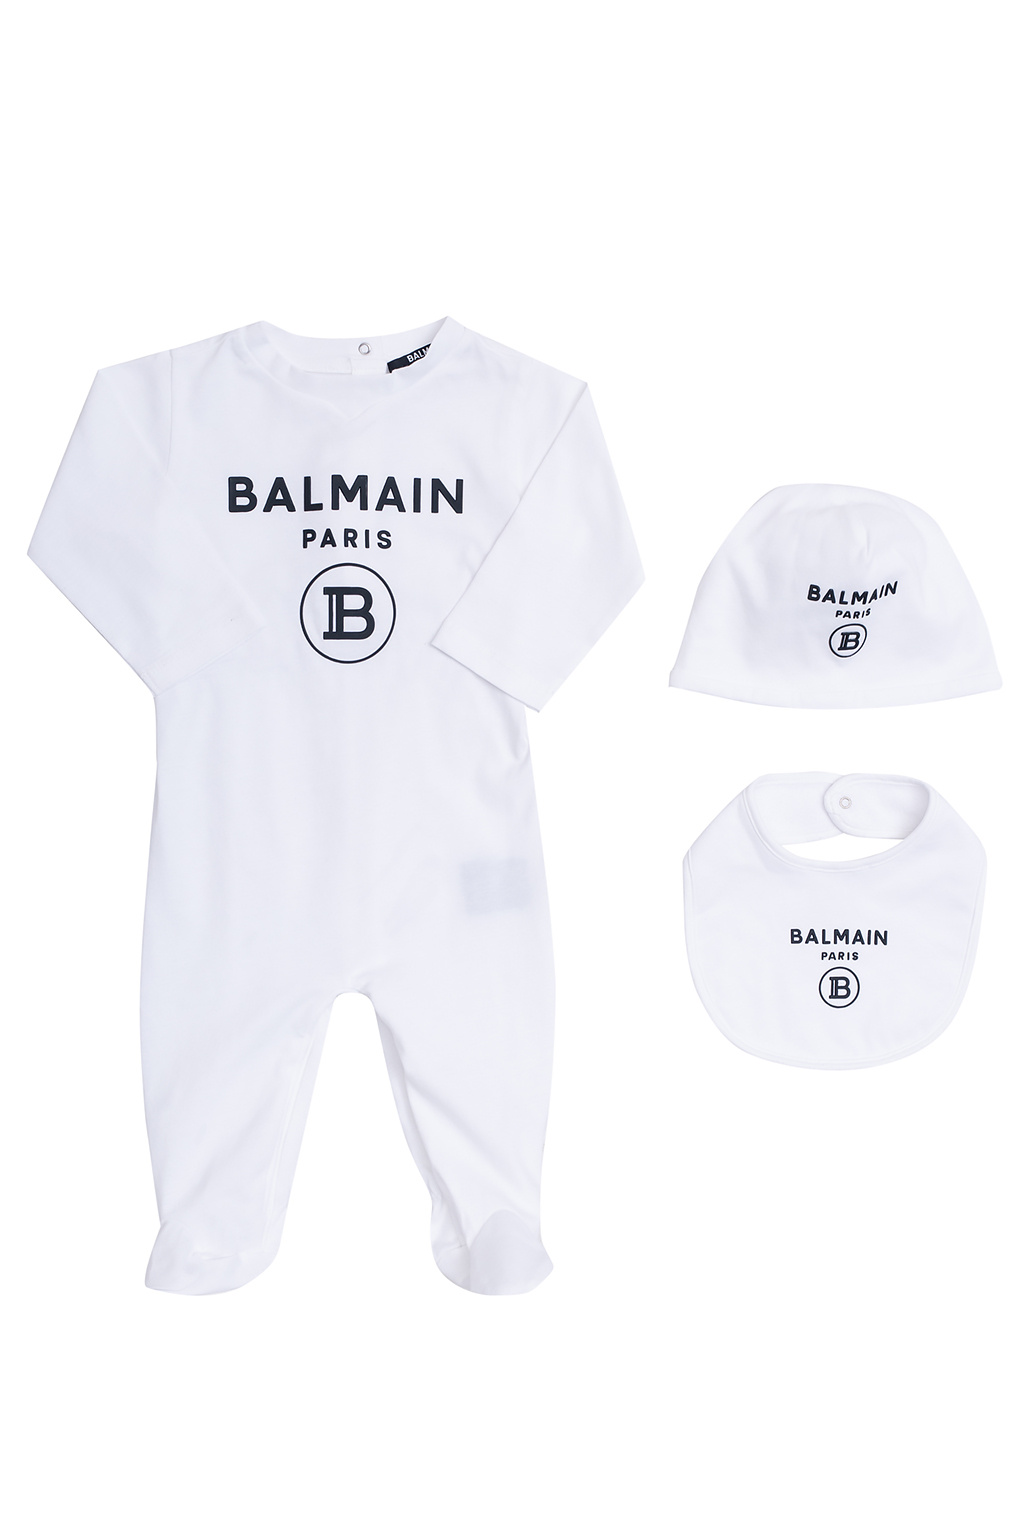 balmain breasted Kids Romper suit, bib & beanie set